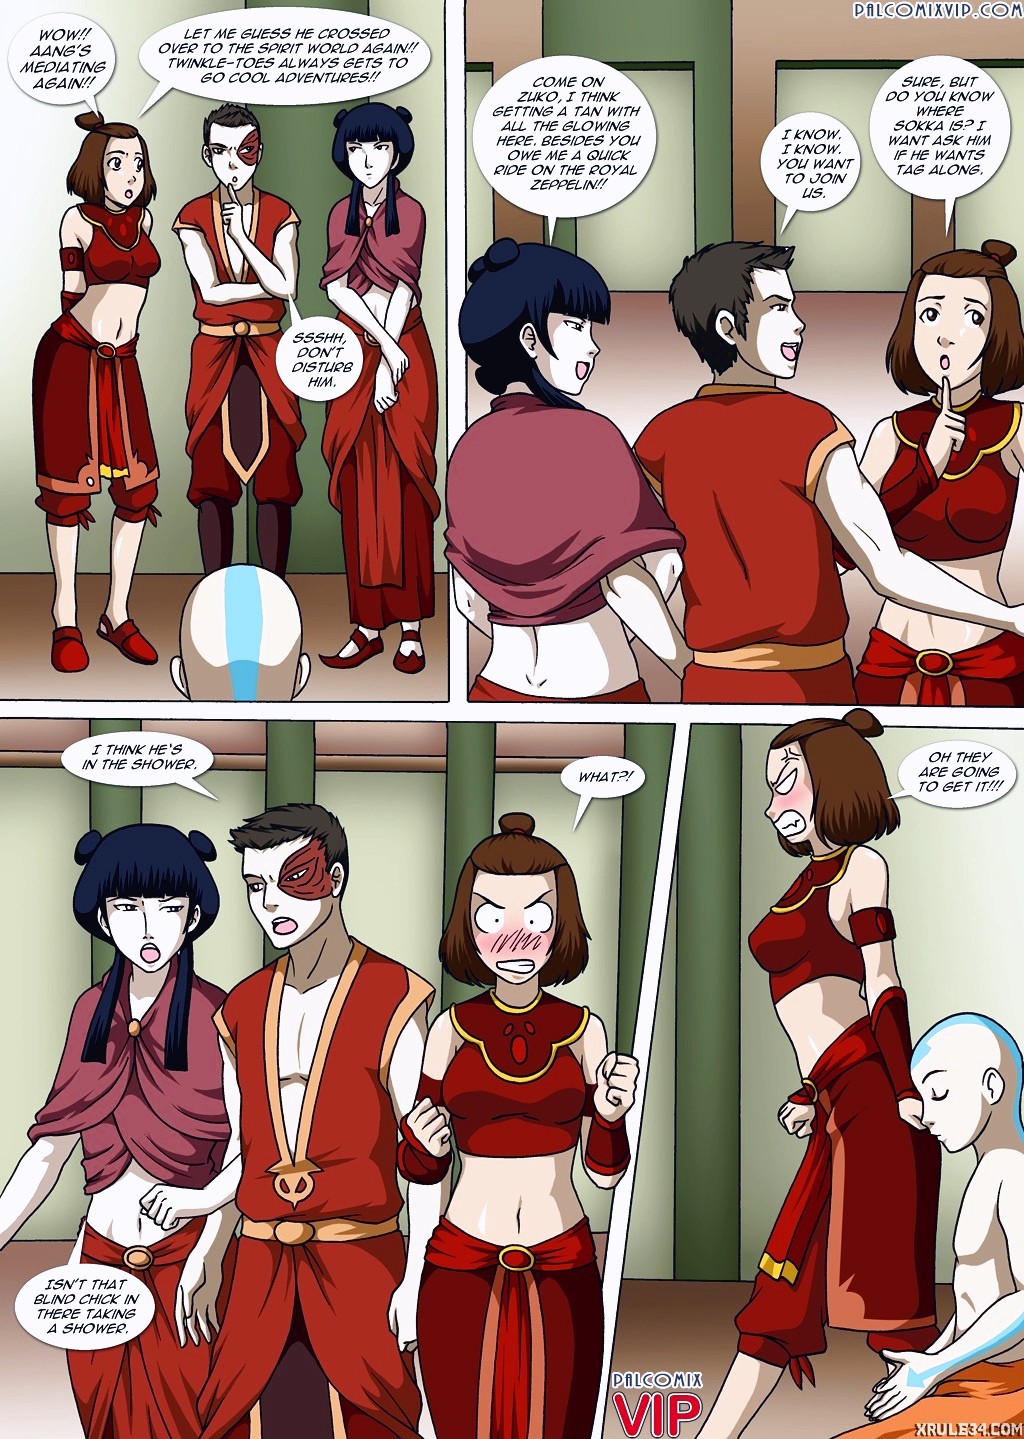 Avatar The Last Jizzbender 2 comic page 008